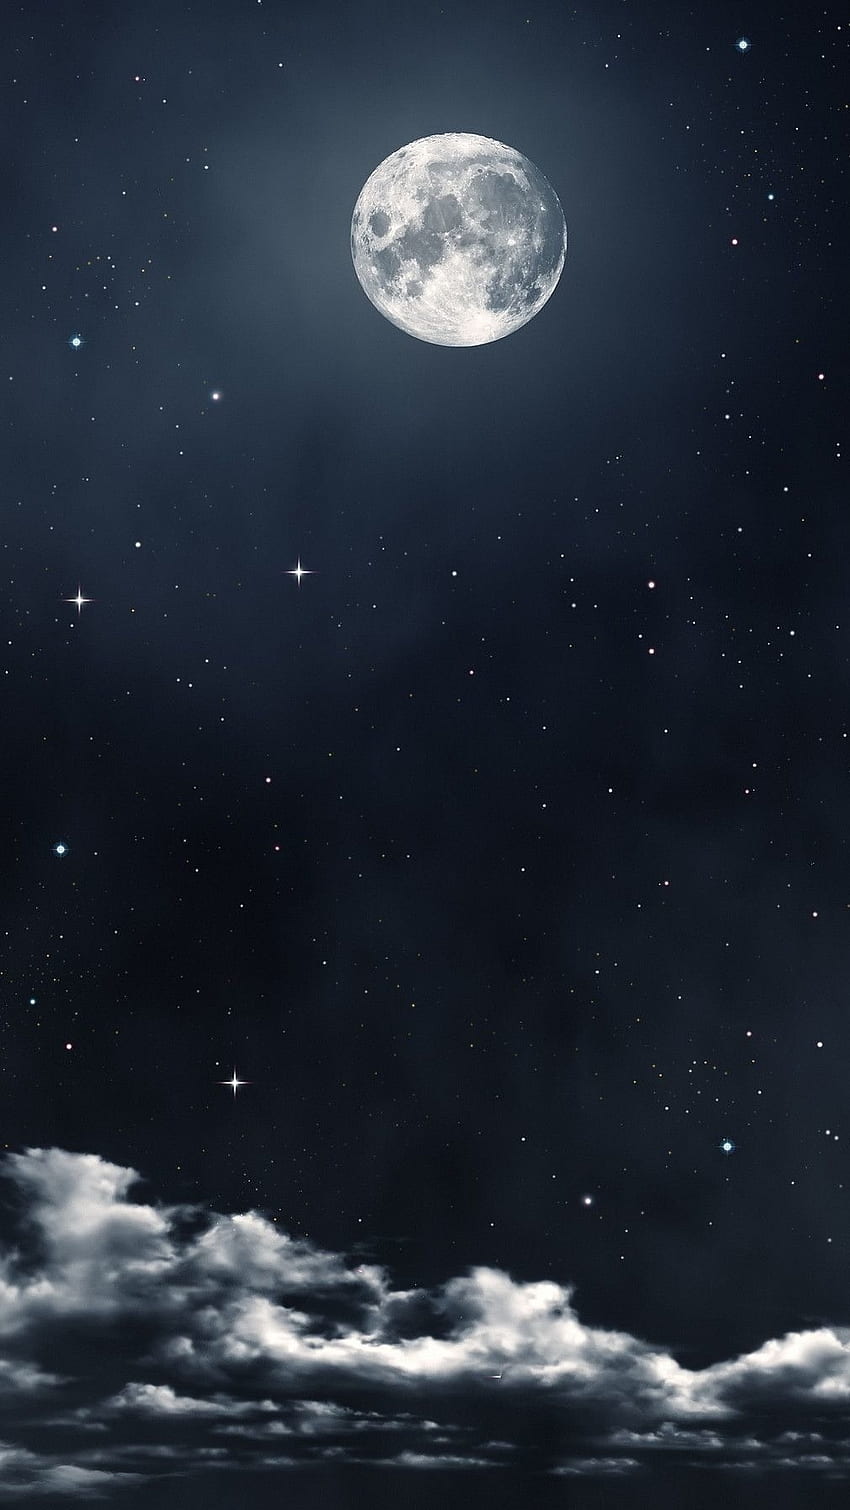 Night Sky and moon 4K wallpaper download